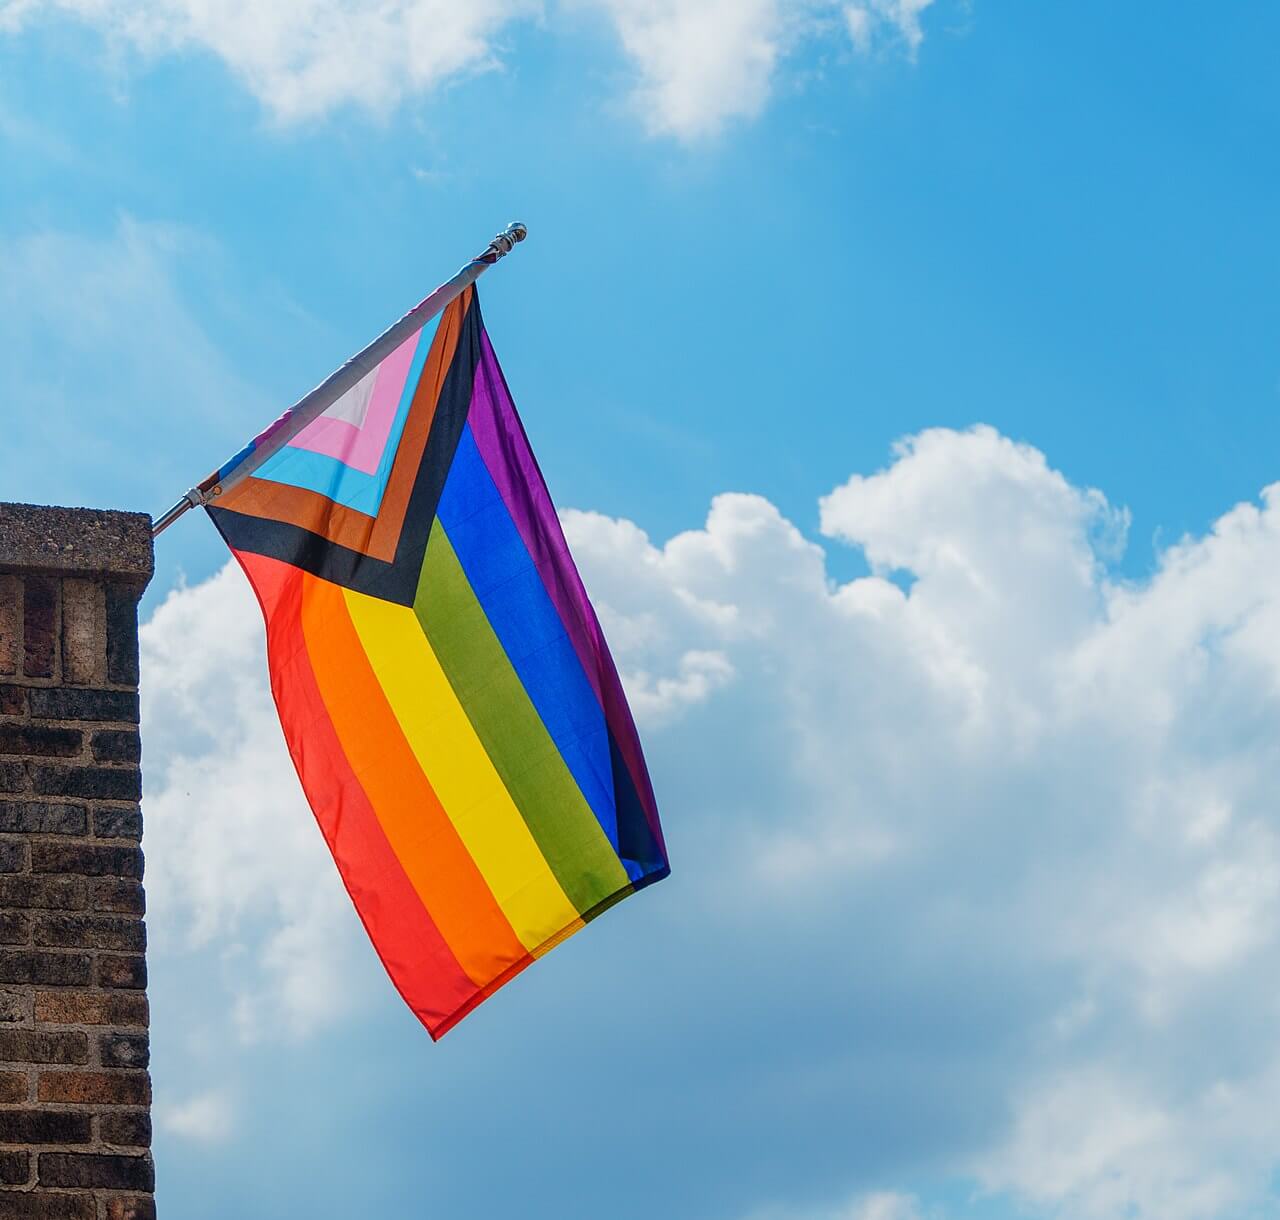 New Progress Pride Flag Represents Expanded Inclusiveness, News